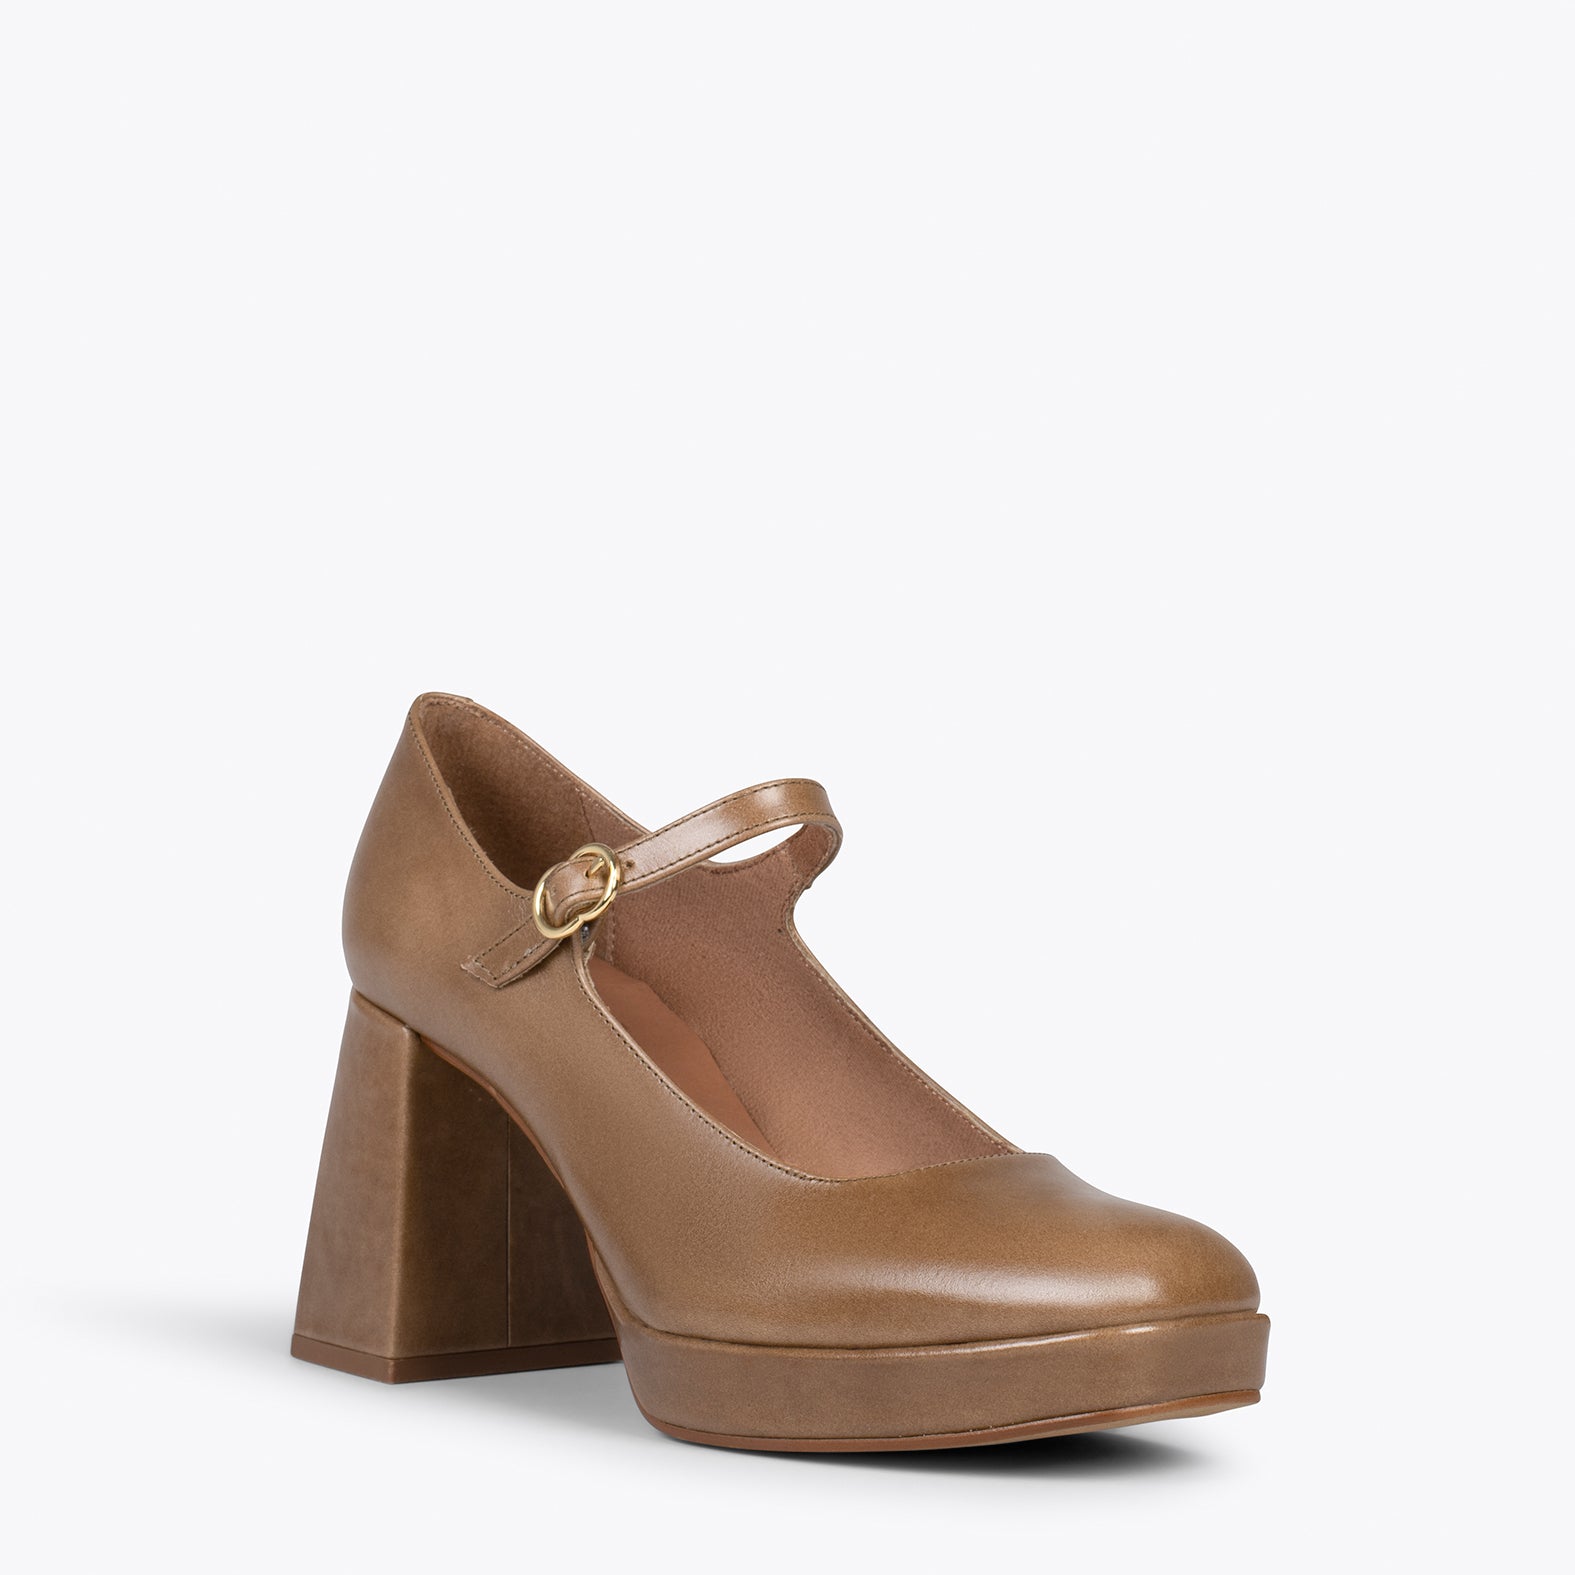 BRIGITTE – TAUPE high heeled mary-jane shoe with platform